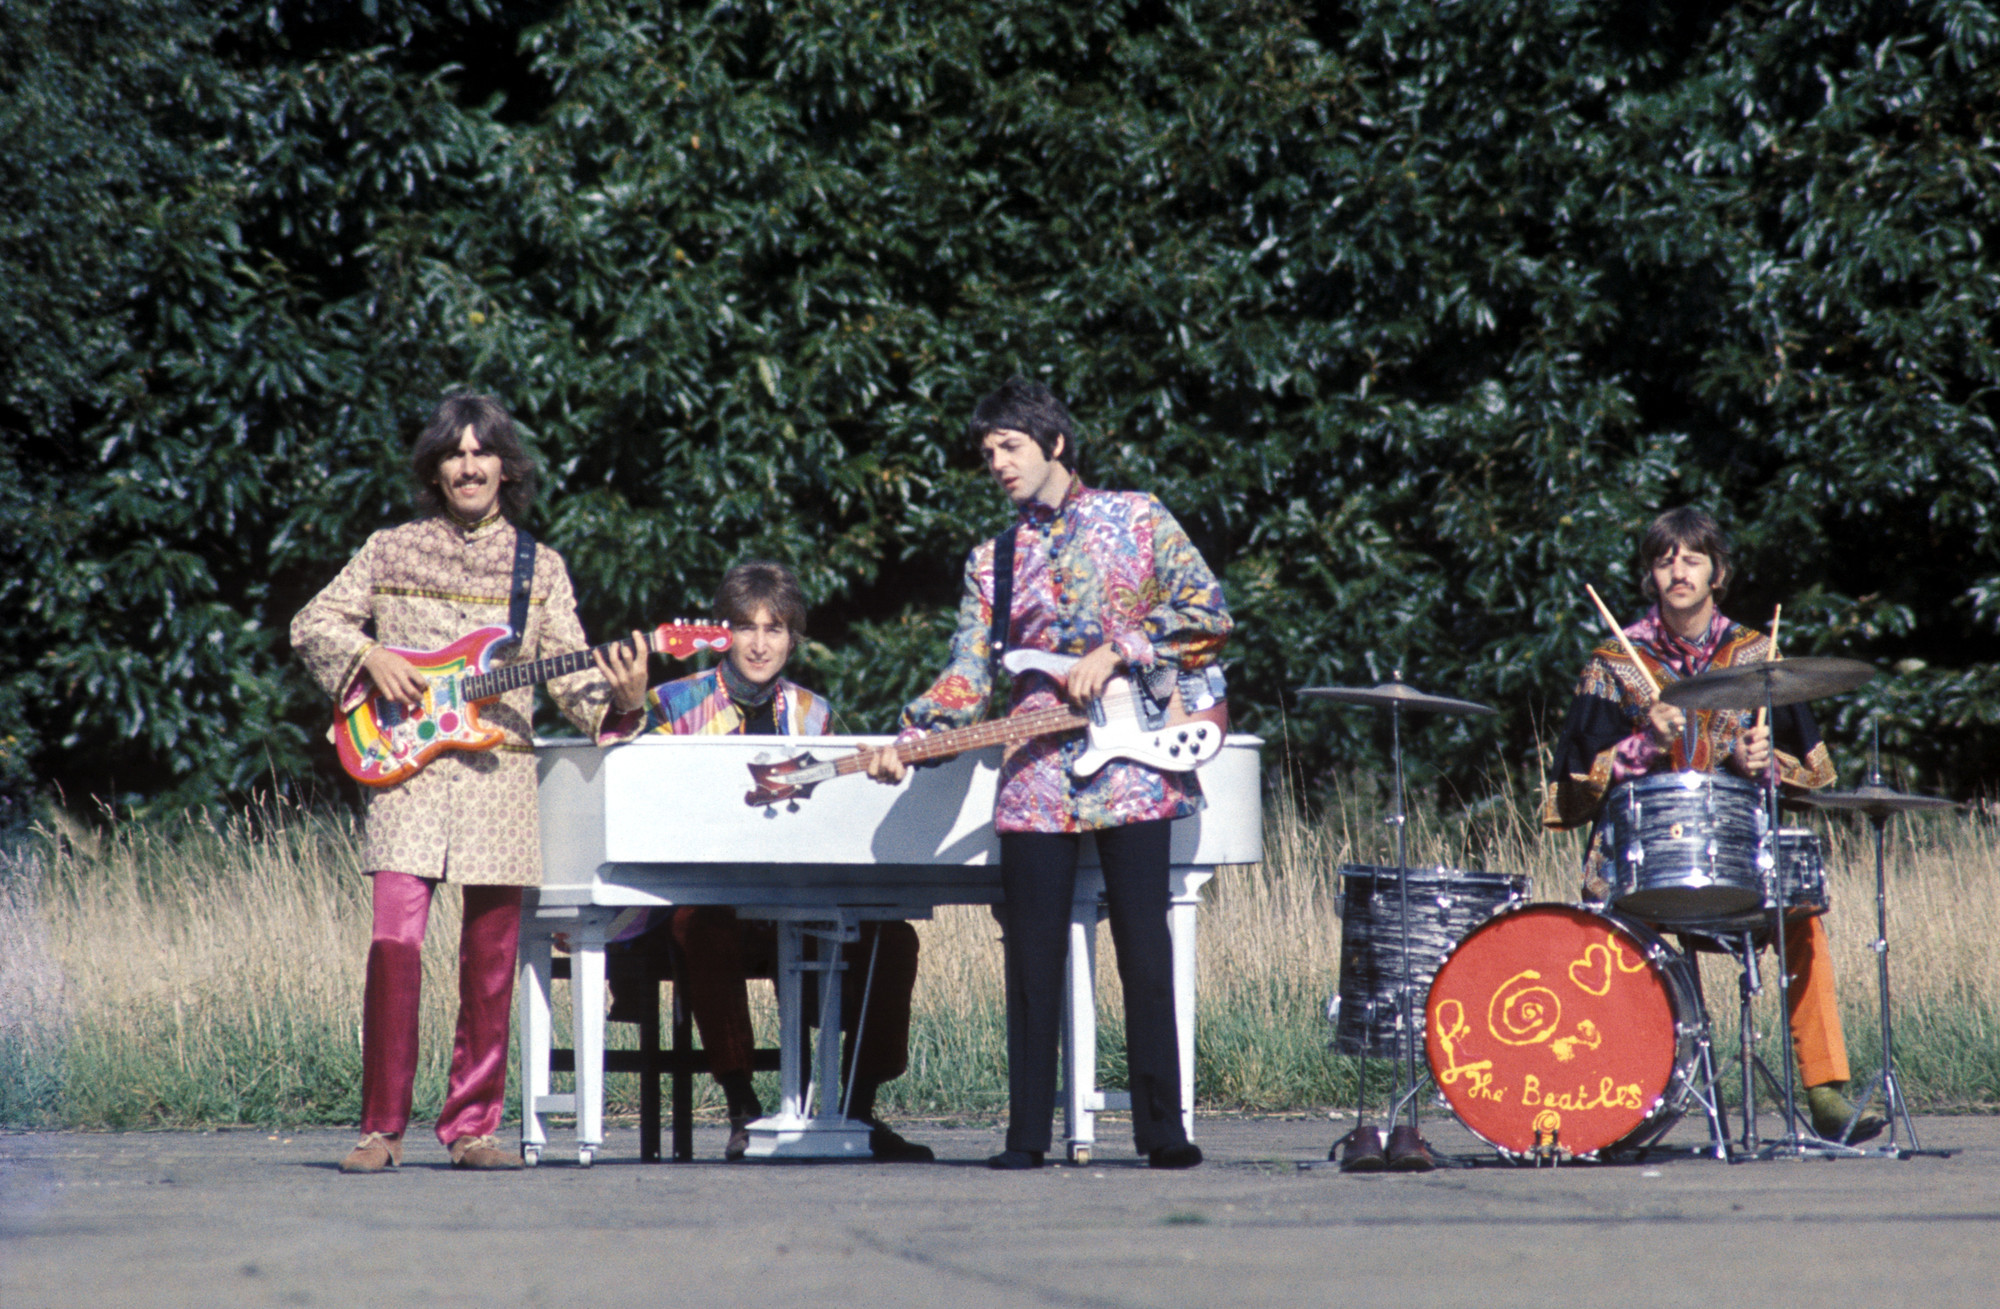 Still of Paul McCartney, John Lennon, George Harrison and Ringo Starr in Magical Mystery Tour (1967)